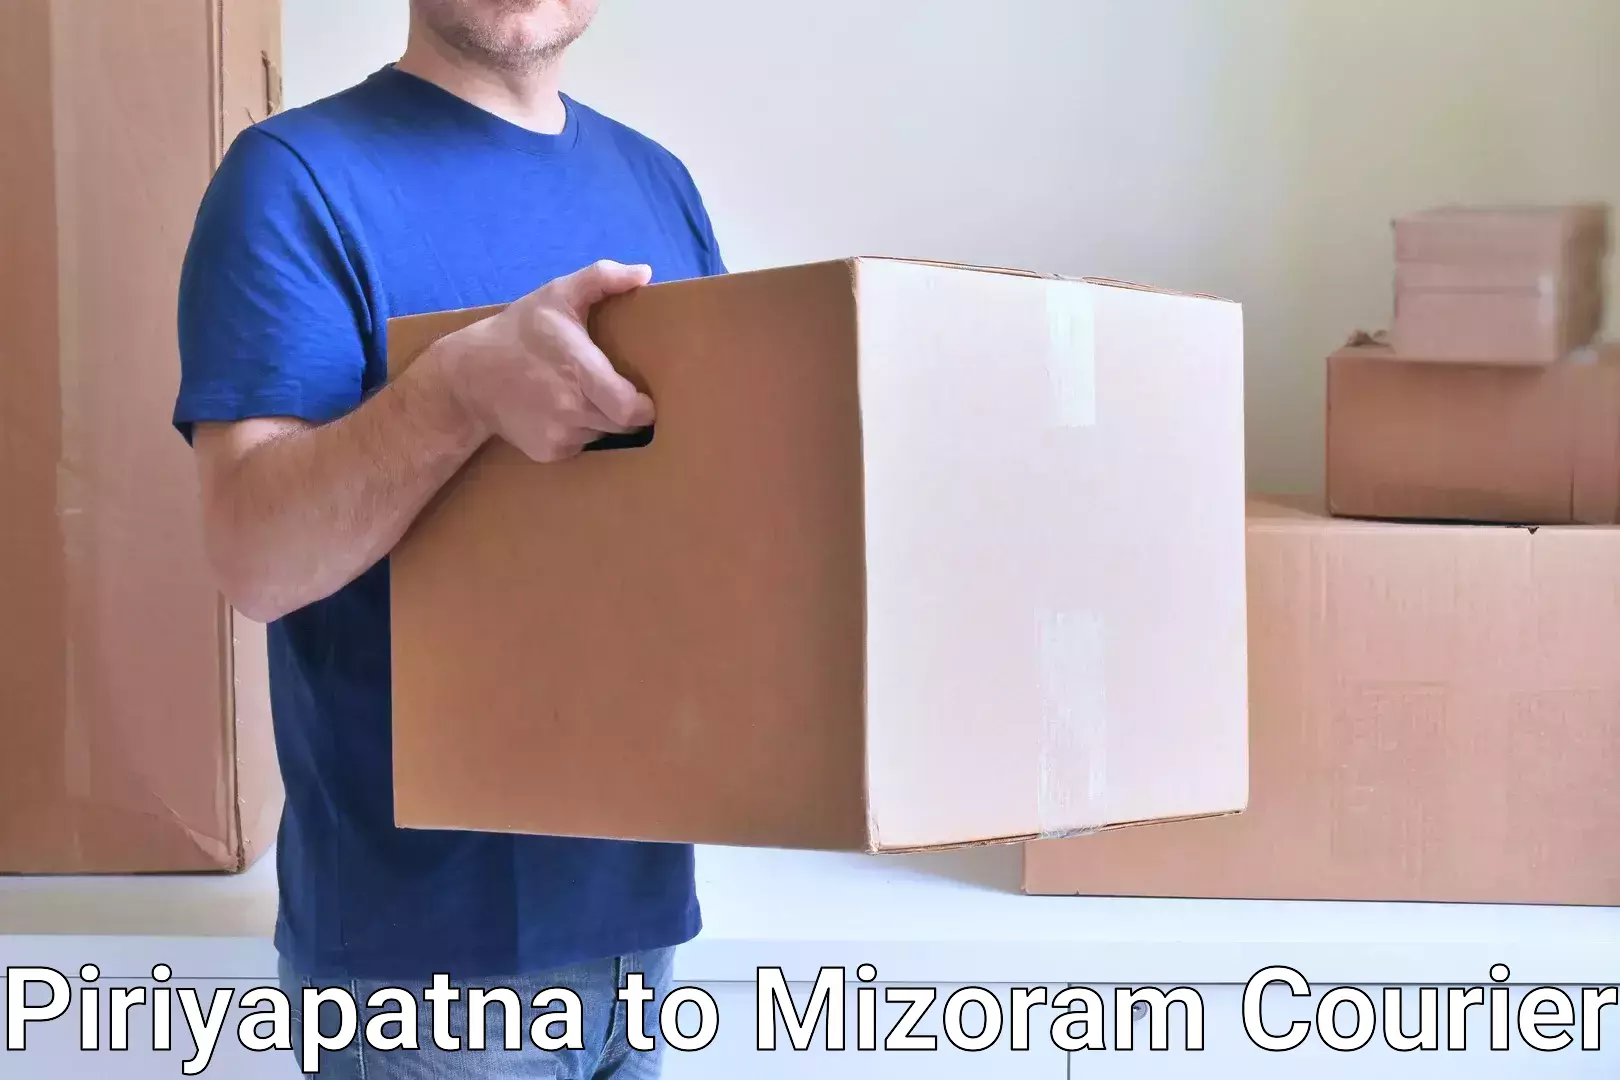 Courier service booking Piriyapatna to Mizoram